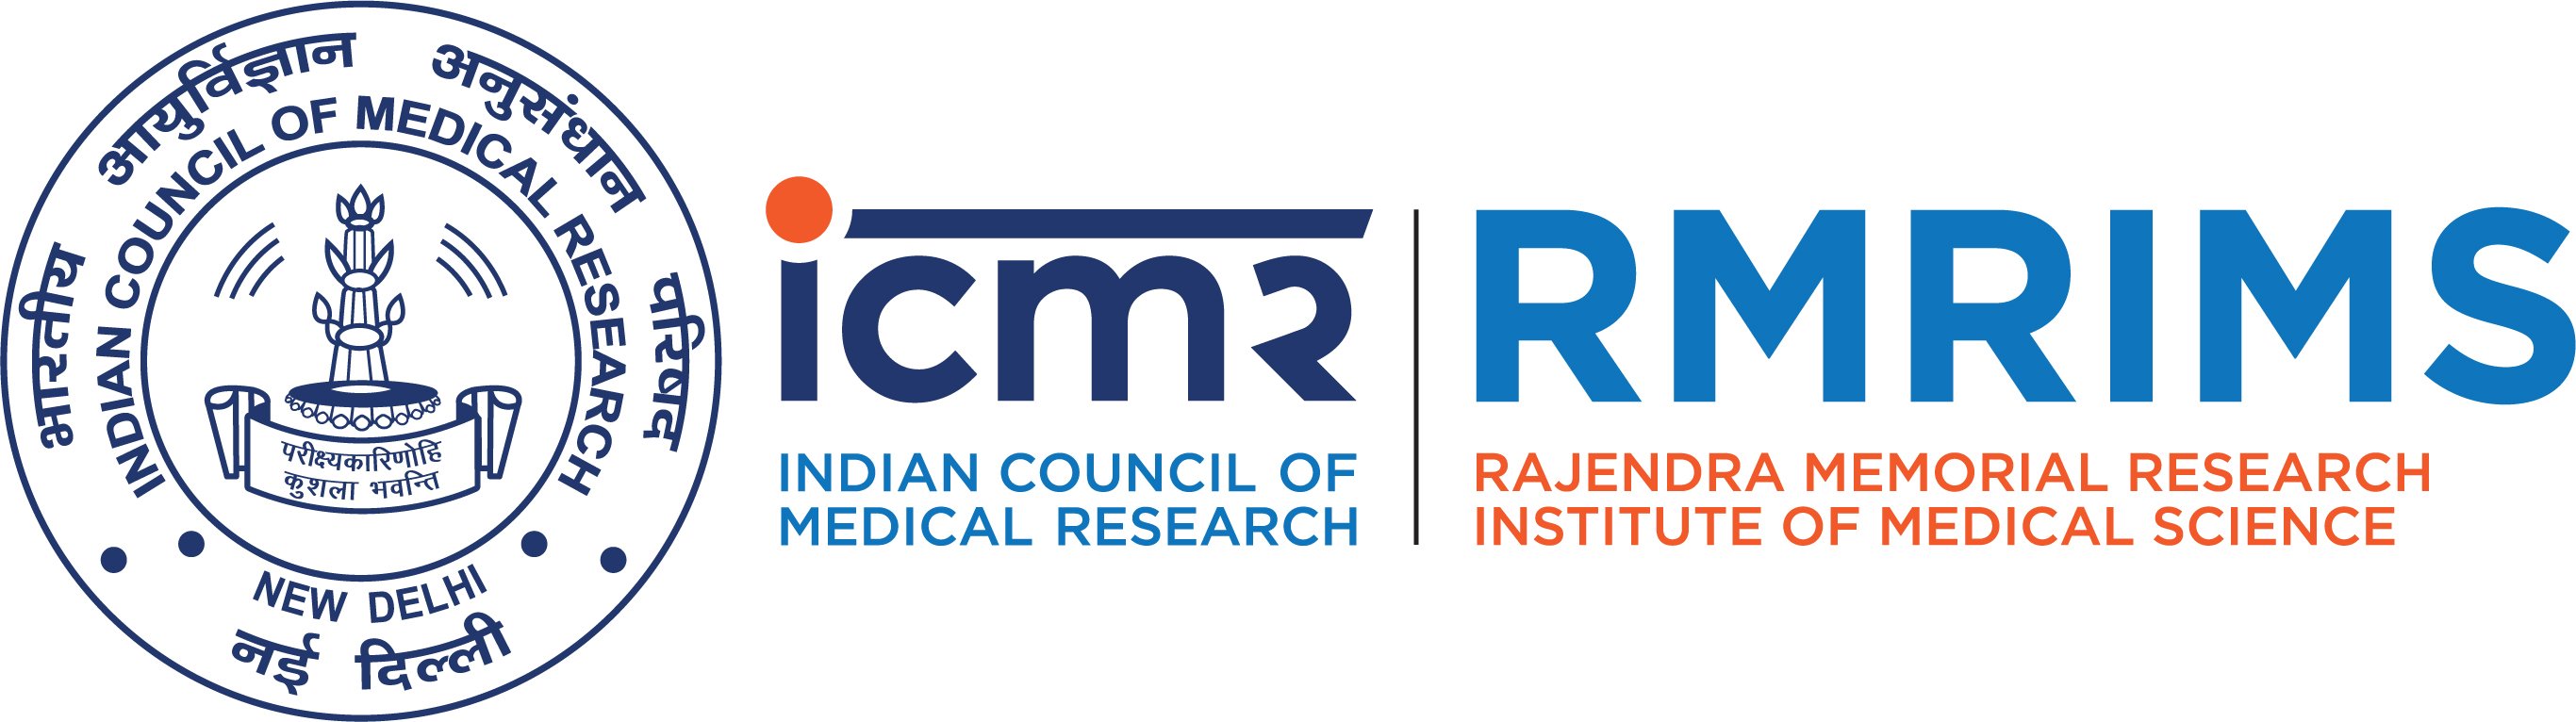 ICMR RMRIMS logo 